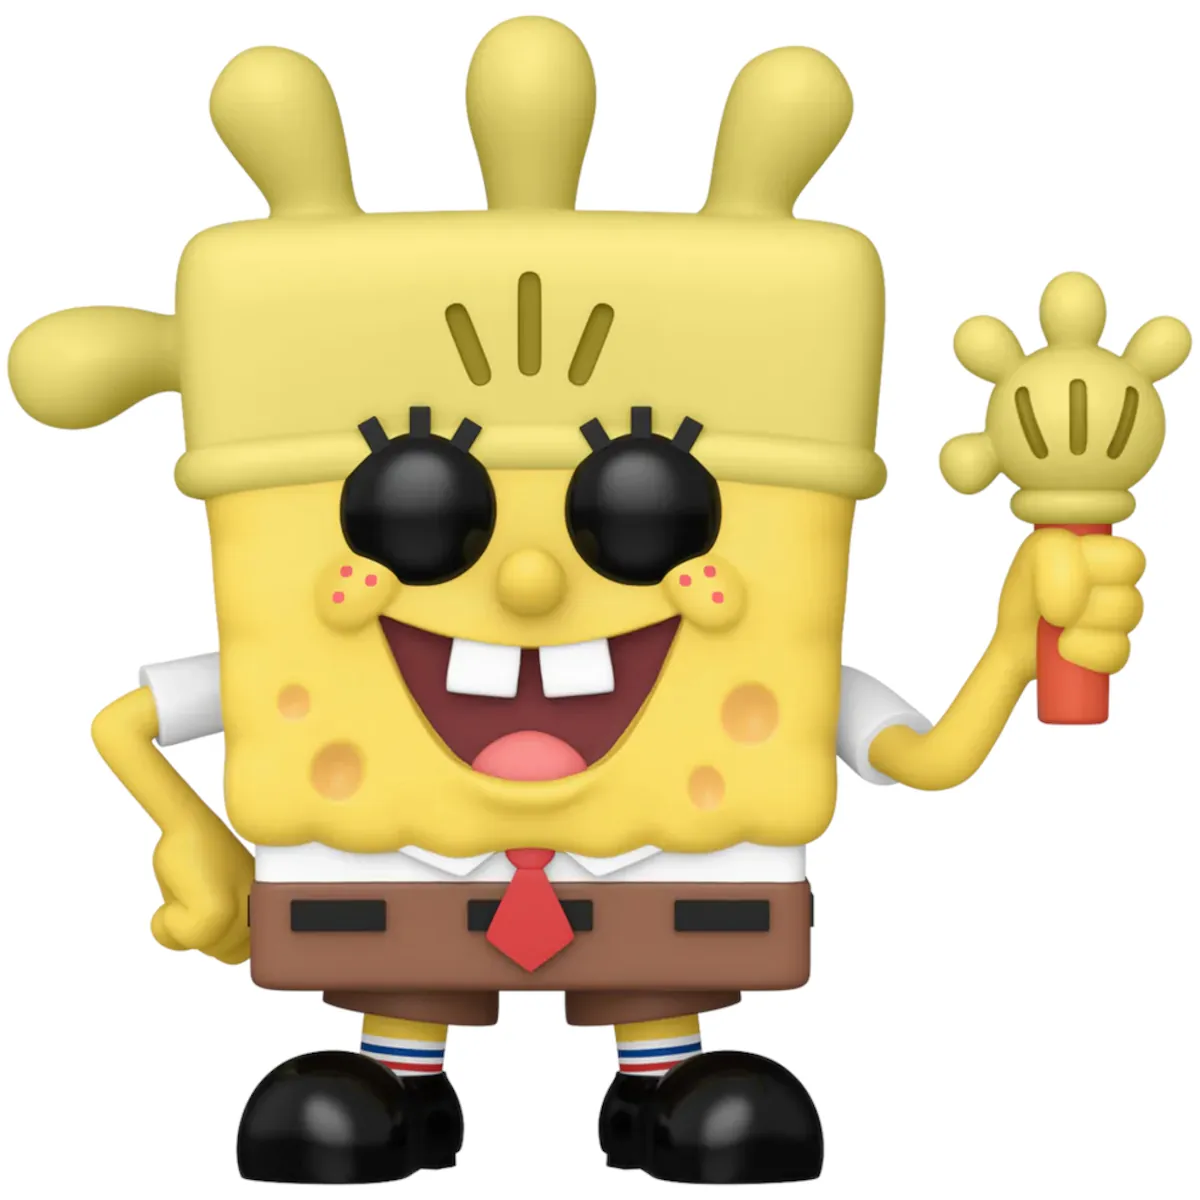 75734 Funko Pop! Animation - SpongeBob SquarePants - Glove World SpongeBob Collectable Vinyl Figure